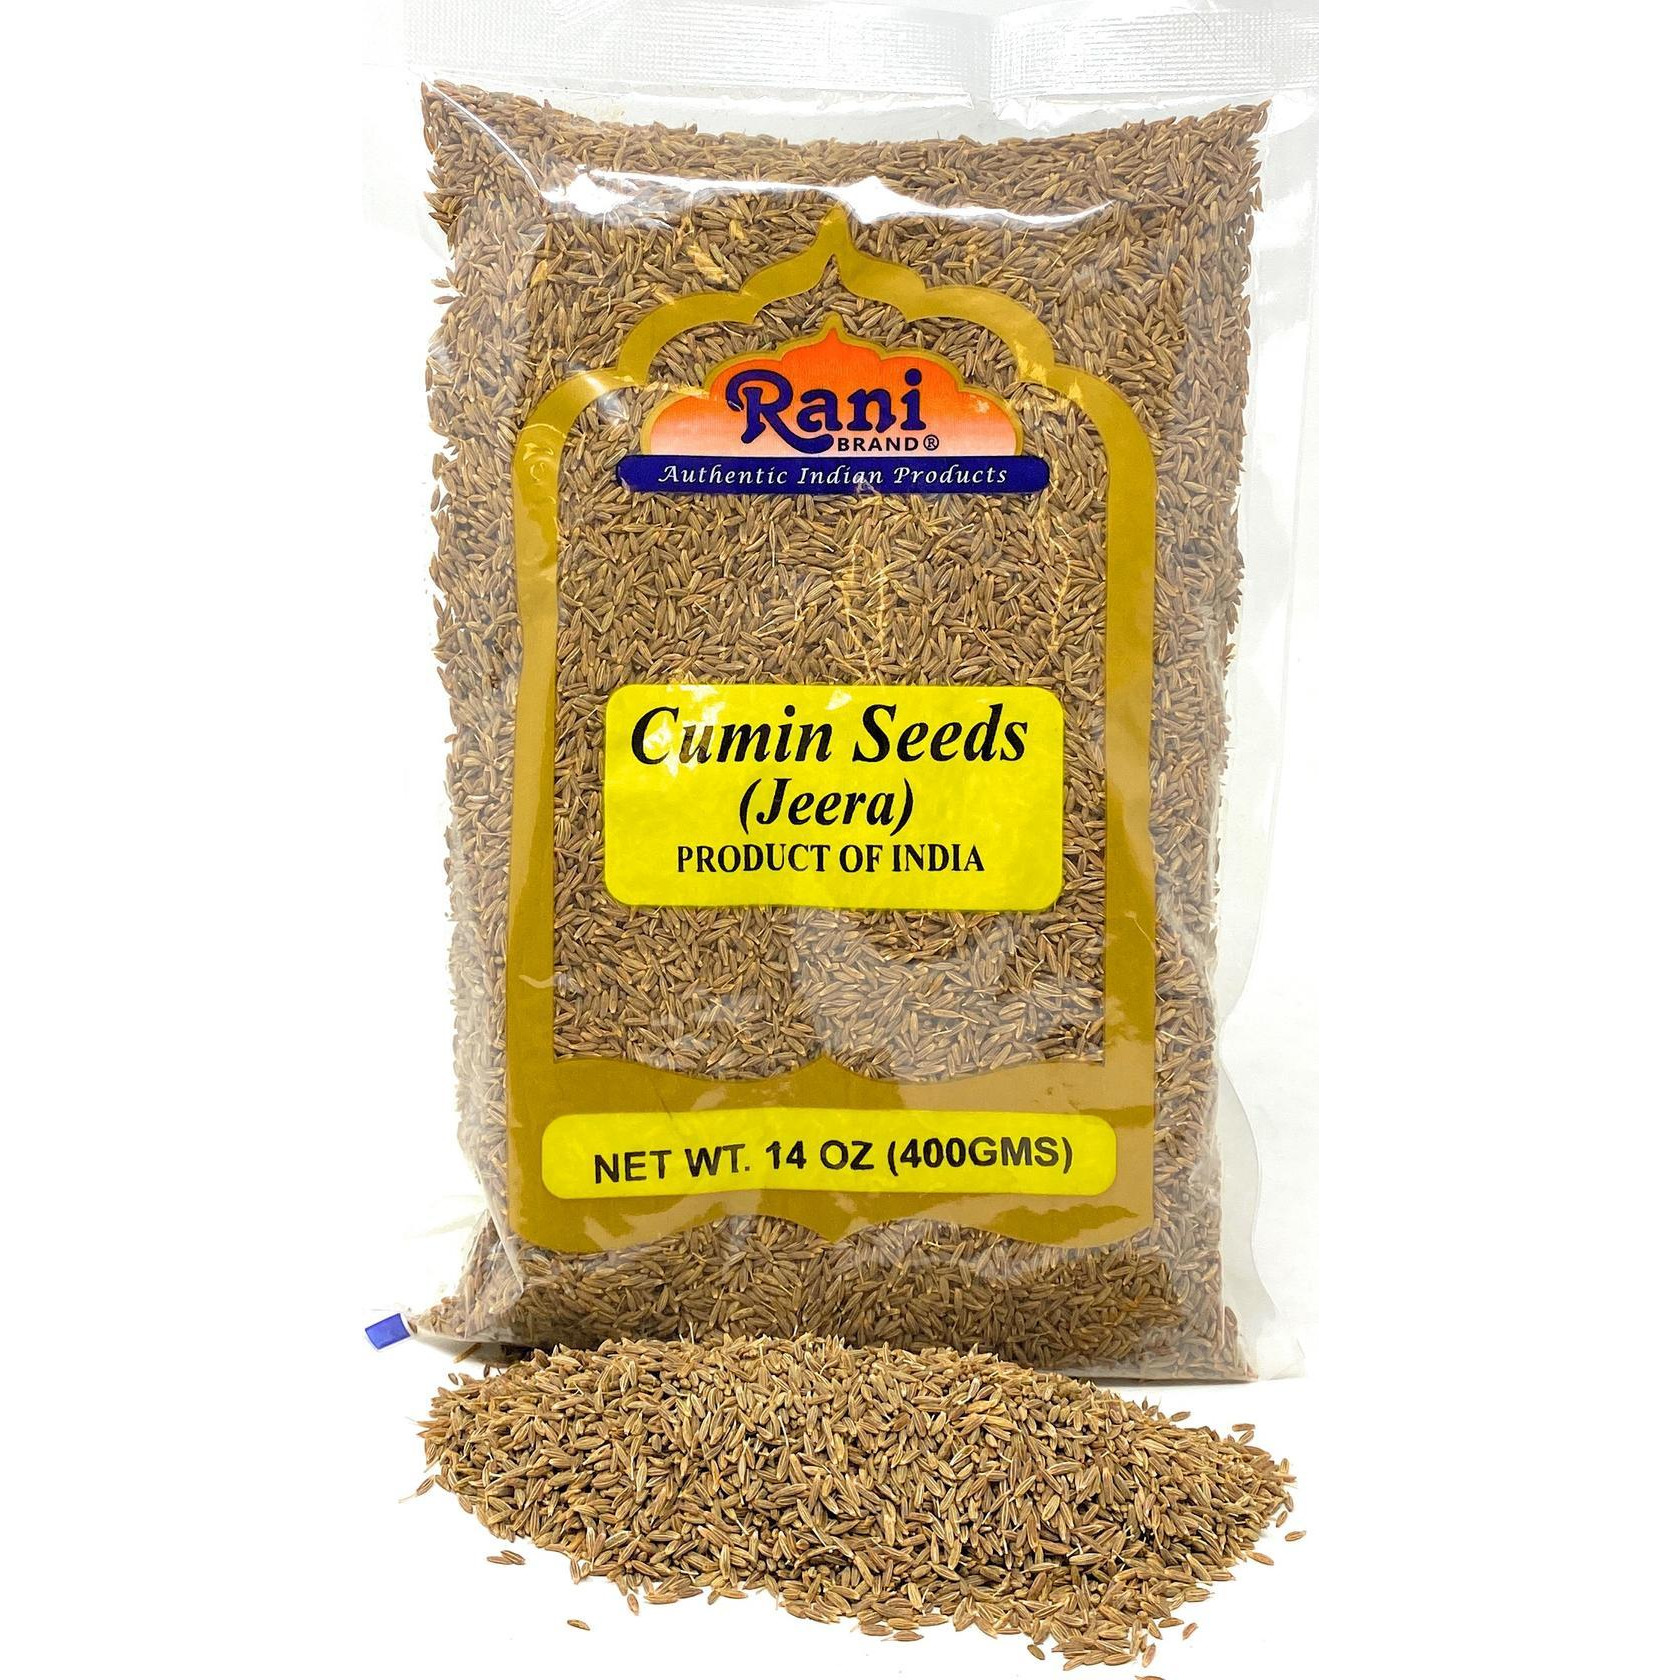 Rani Cumin Seeds Whole (Jeera) Spice 400gm (14oz) ~ All Natural | Gluten Friendly | NON-GMO | Vegan | Indian Origin